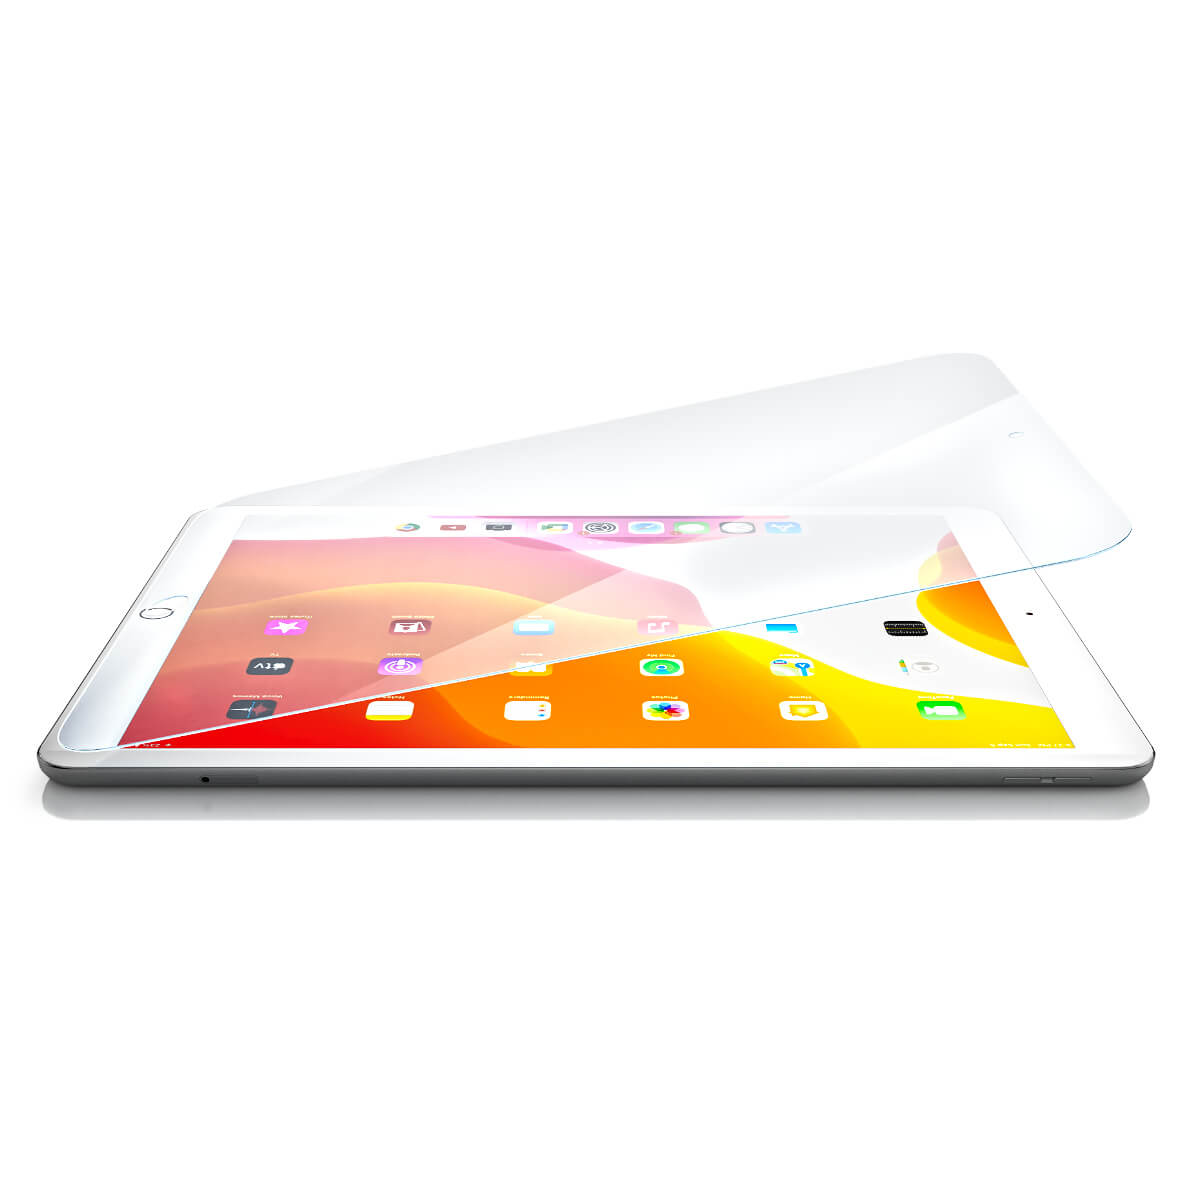 2x Hugmie iPad 2/3/4 9.7-inch Glass Screen Protector